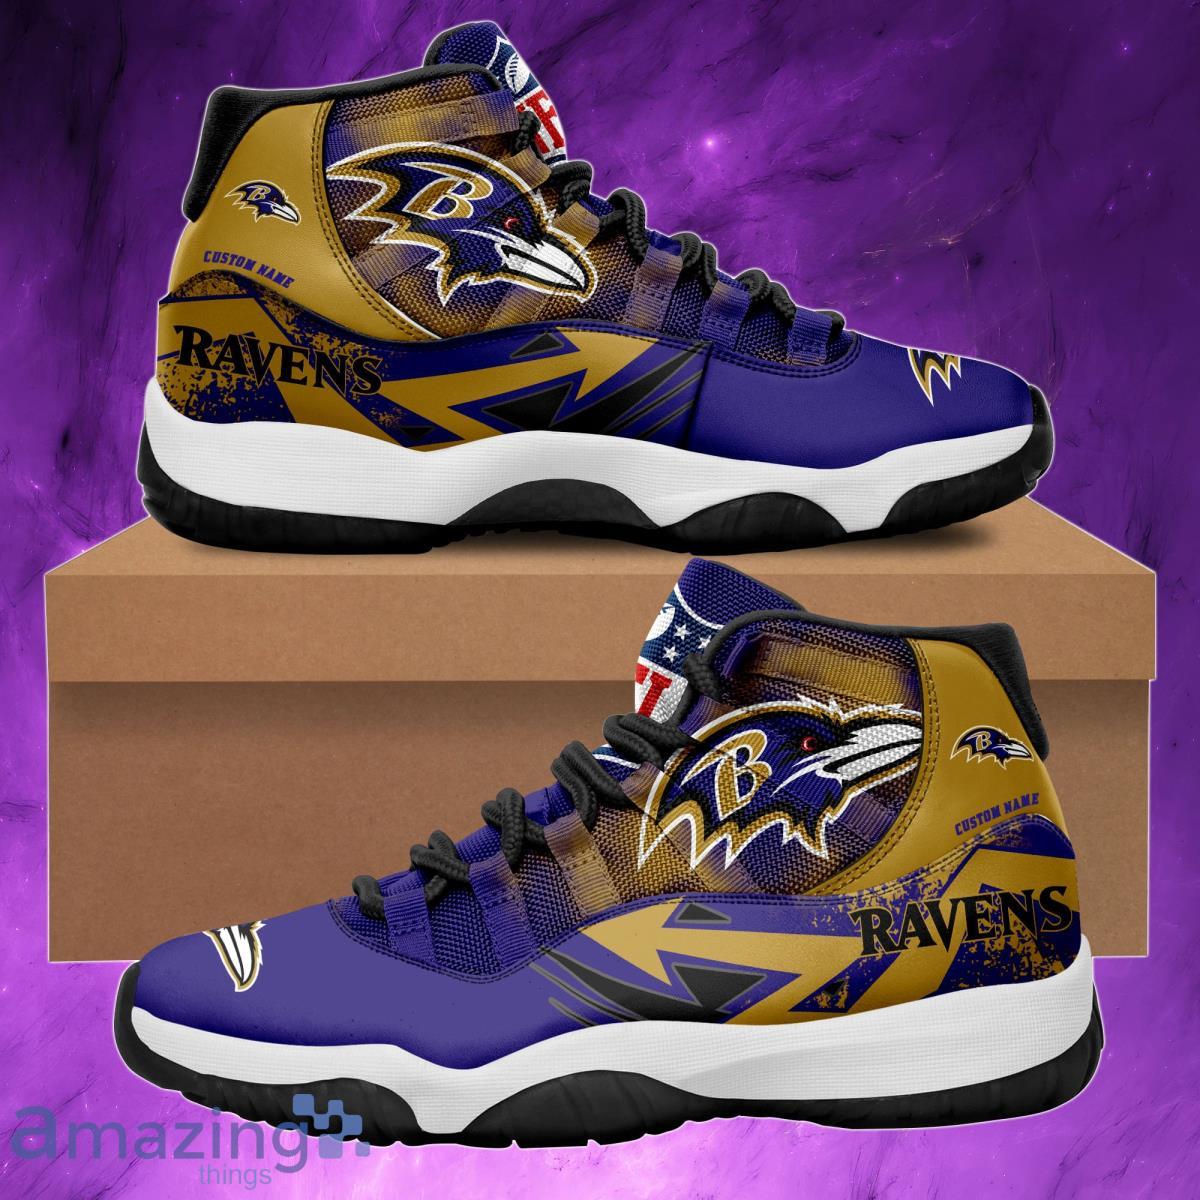 Baltimore Ravens Team Logo AJ High Top Sneaker Boots - Owl Fashion